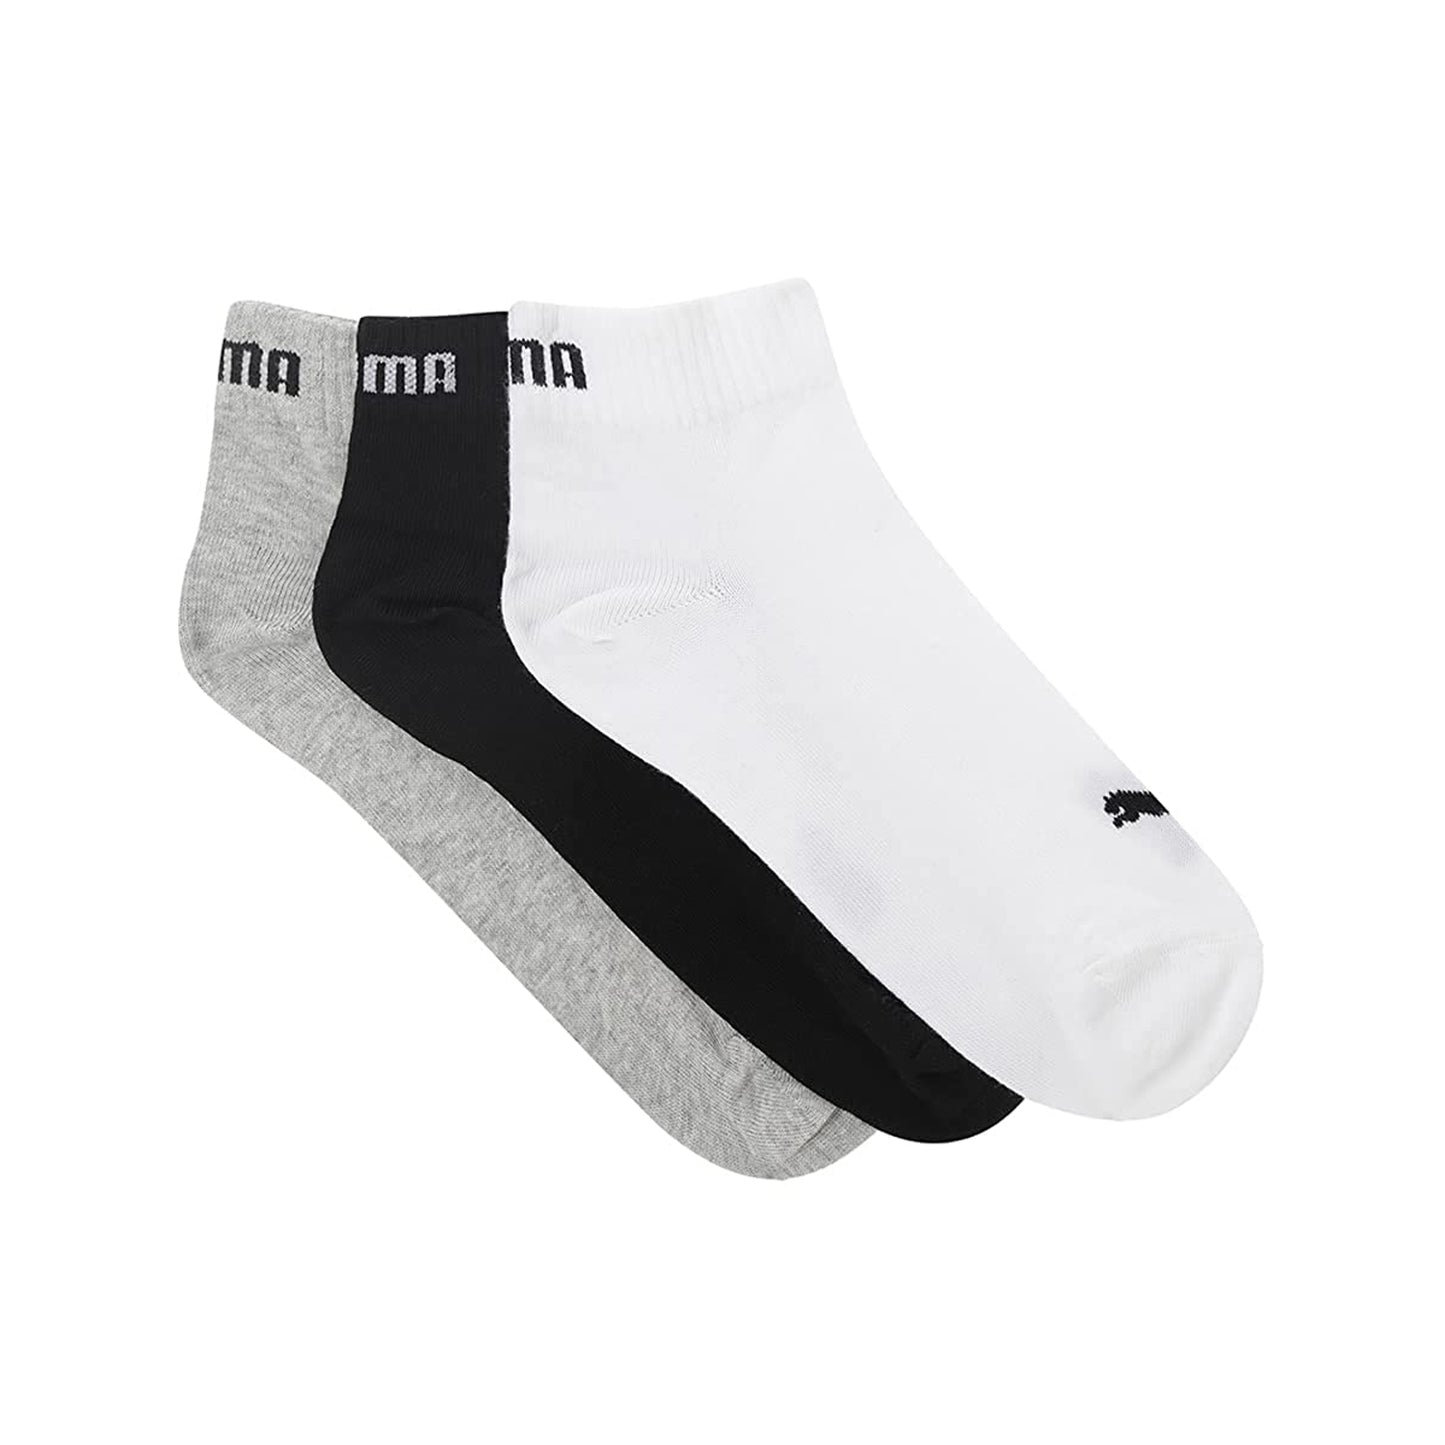 Puma Quarter Plain Soft Cotton Socks, 3 Pairs - Best Price online Prokicksports.com